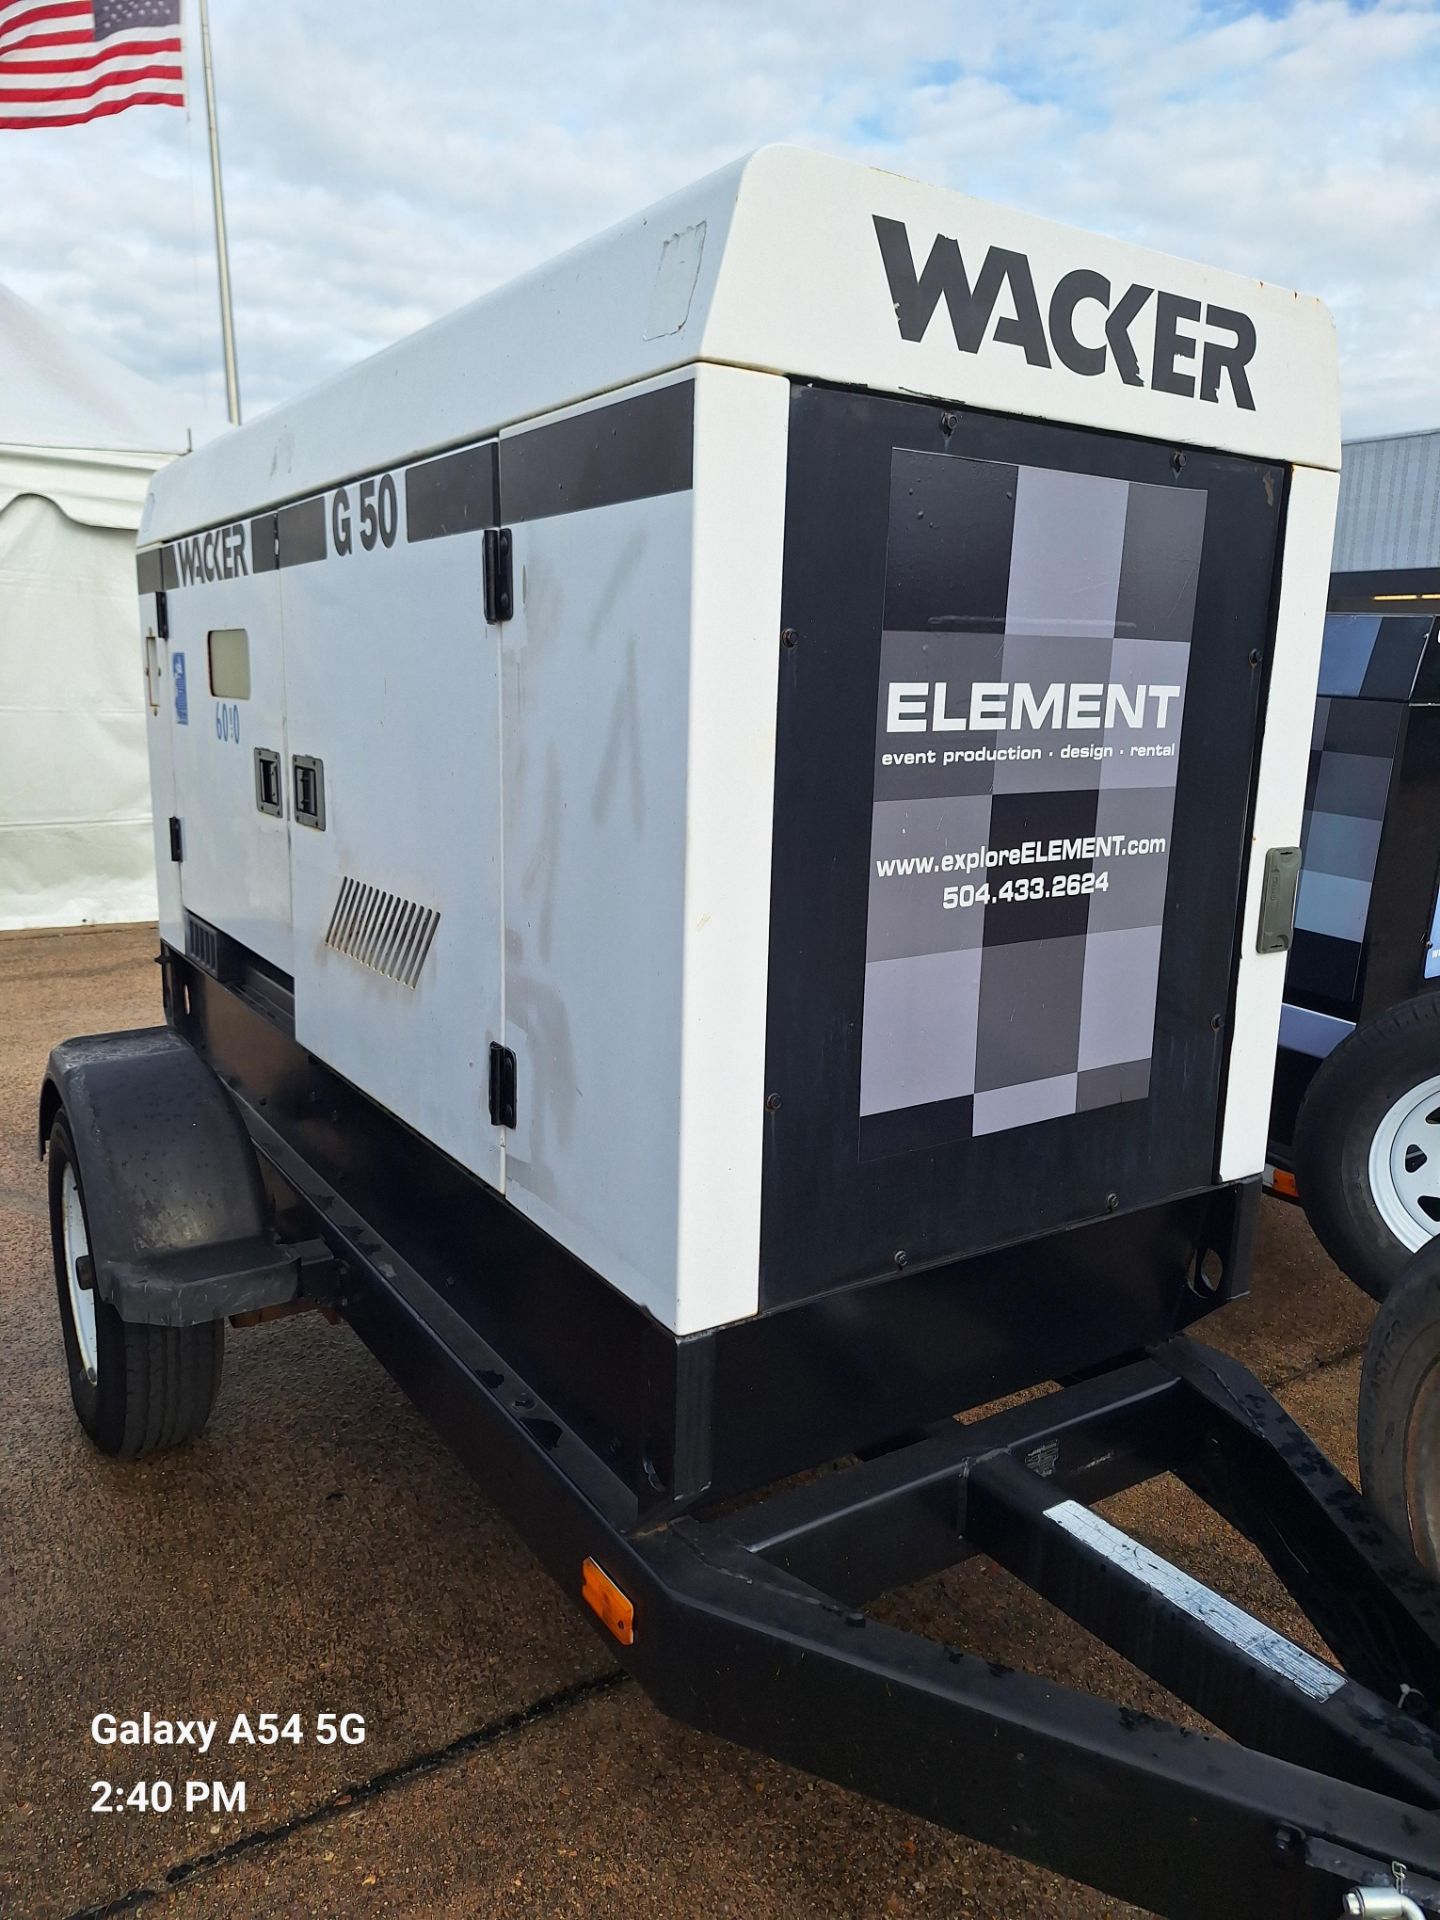 G50 Wacker Generator, fully tested - Image 12 of 12